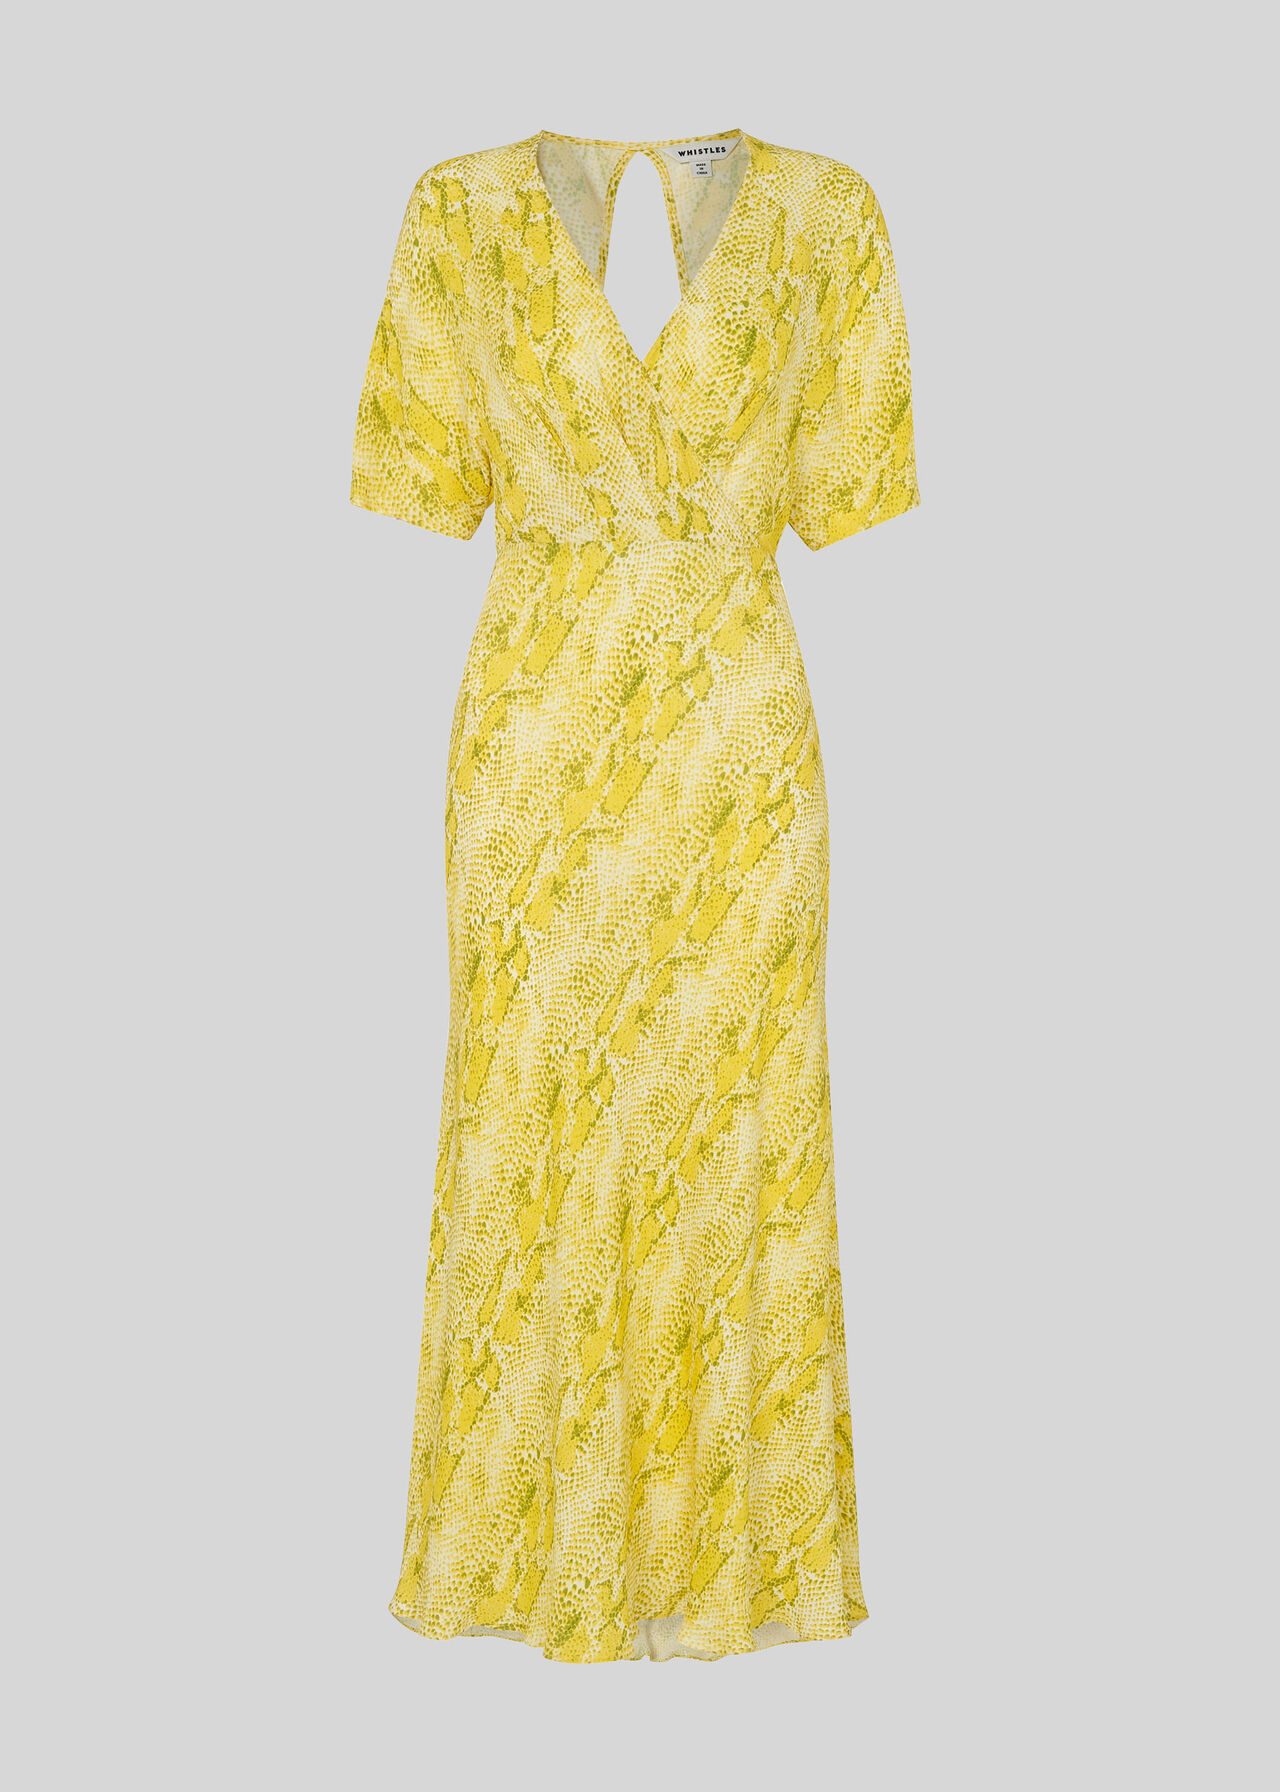 Python Print Midi Dress Yellow/Multi